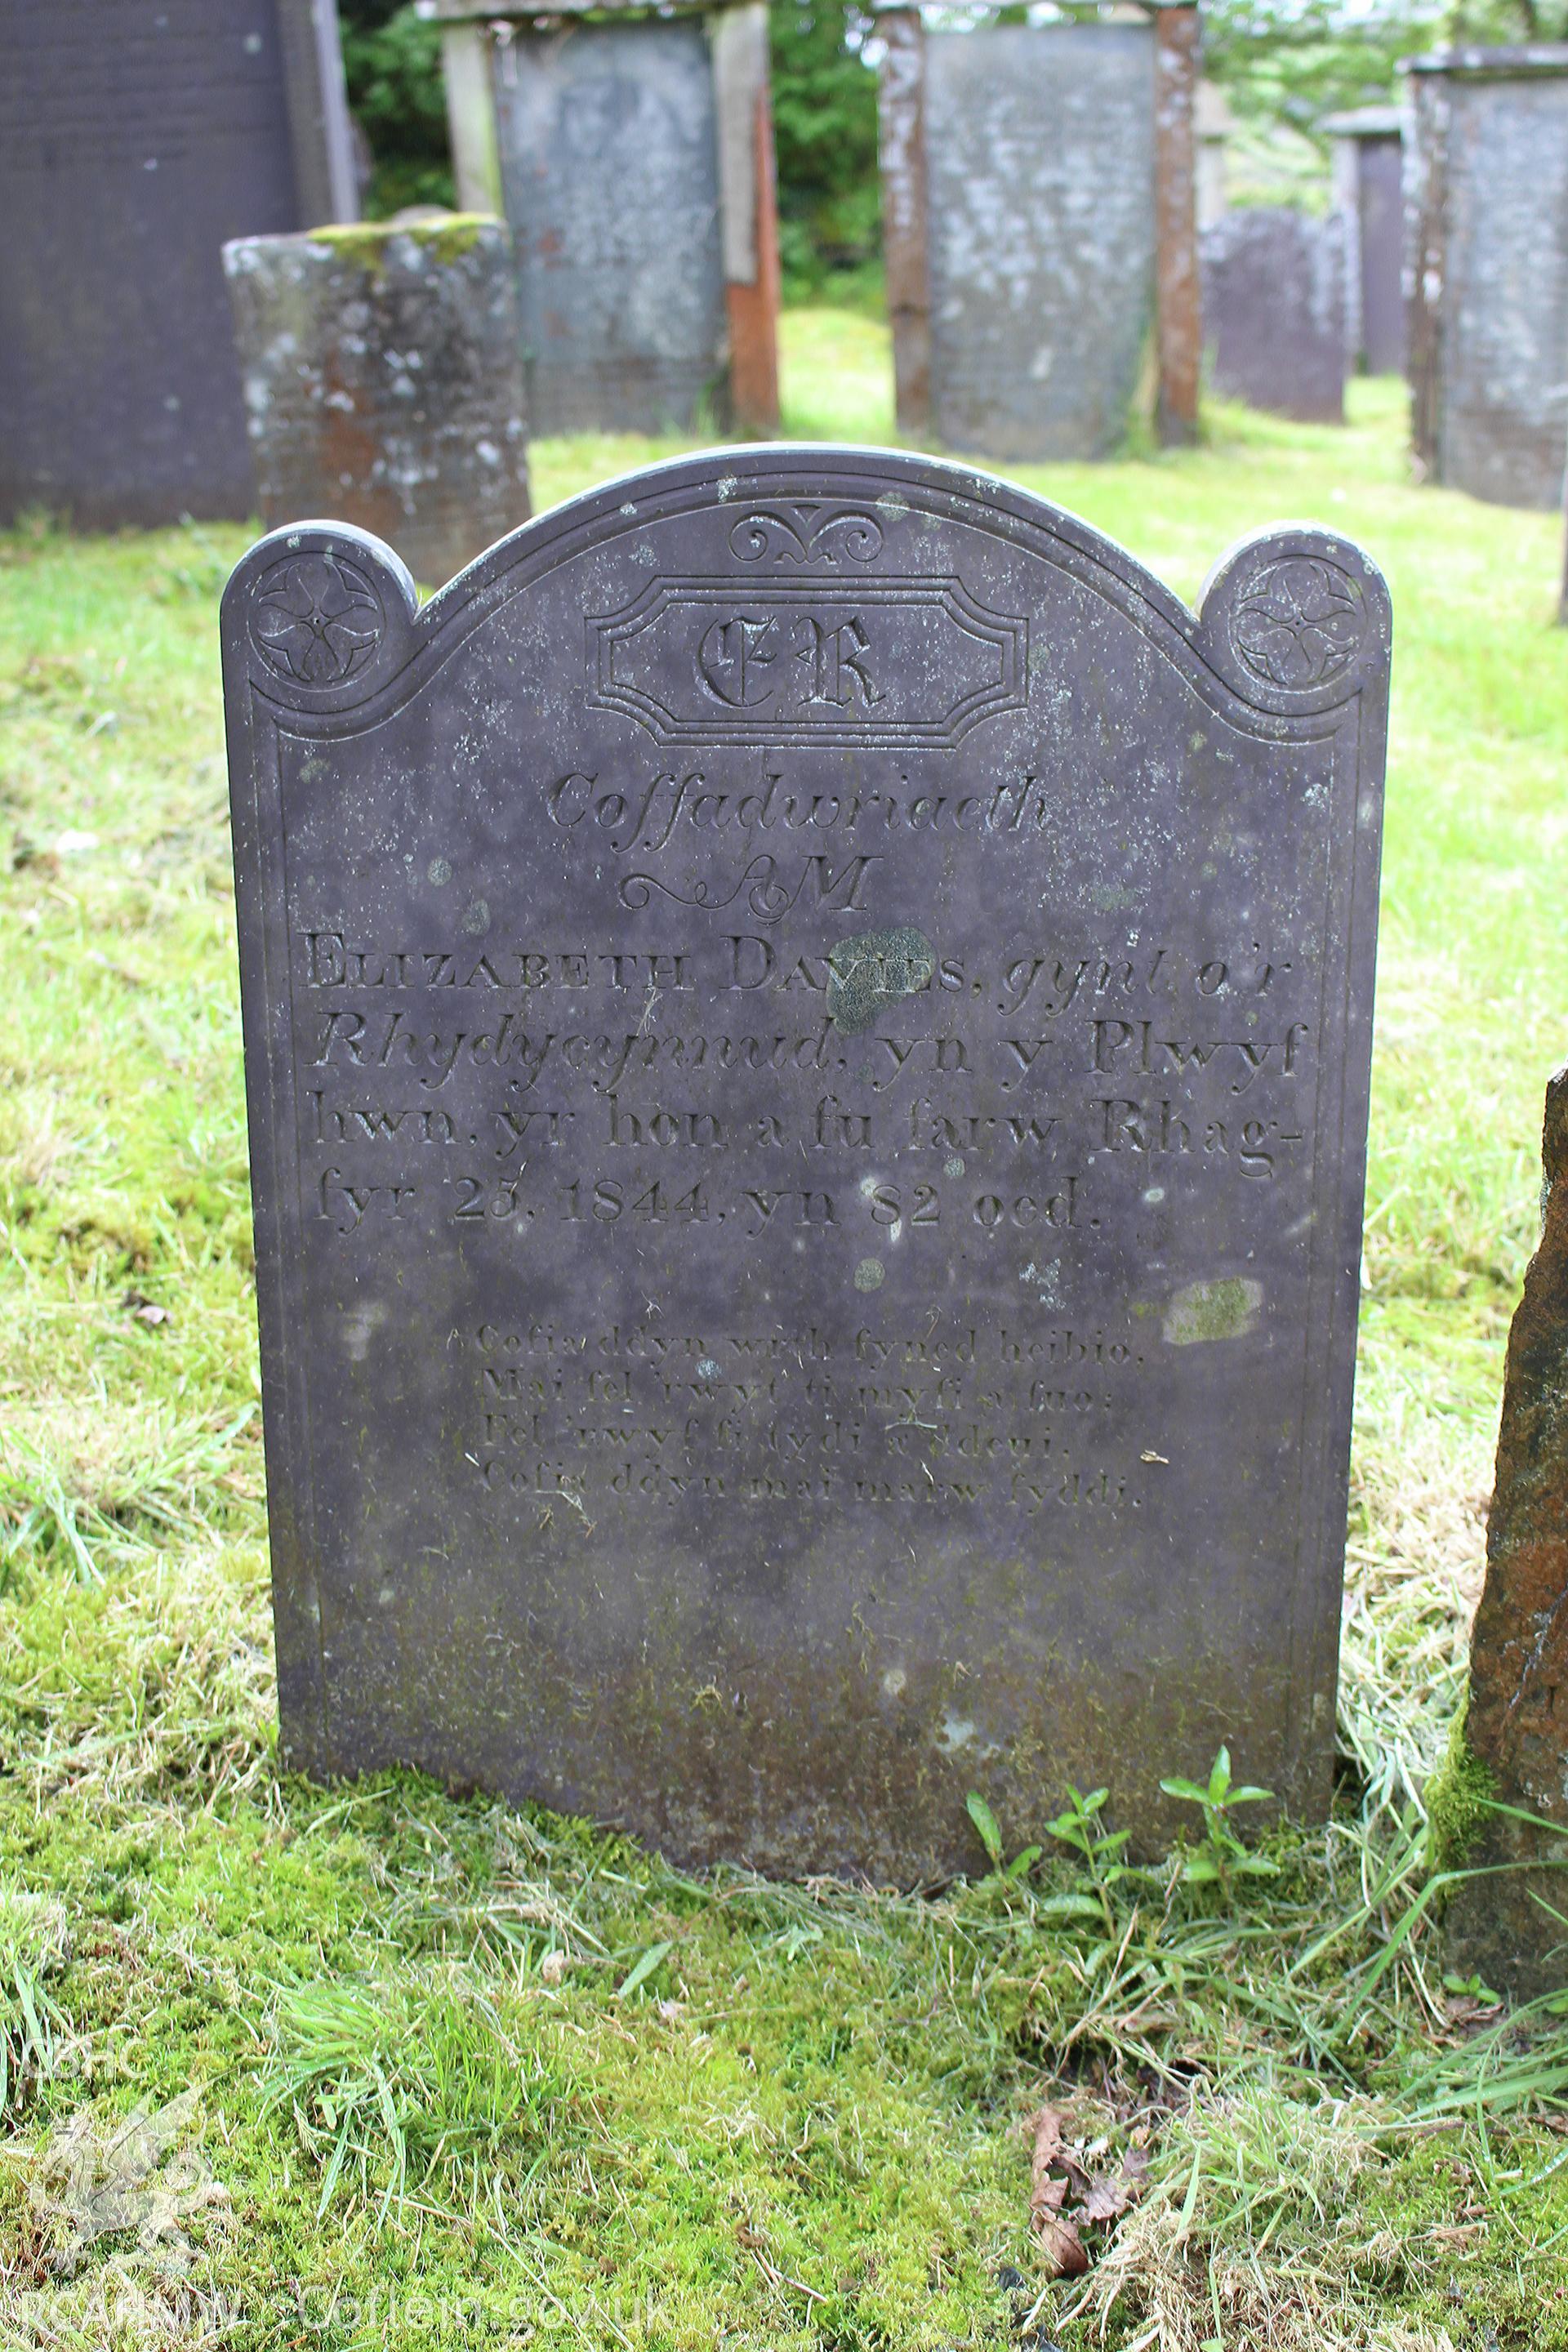 Gravestone of Elizabeth Davies